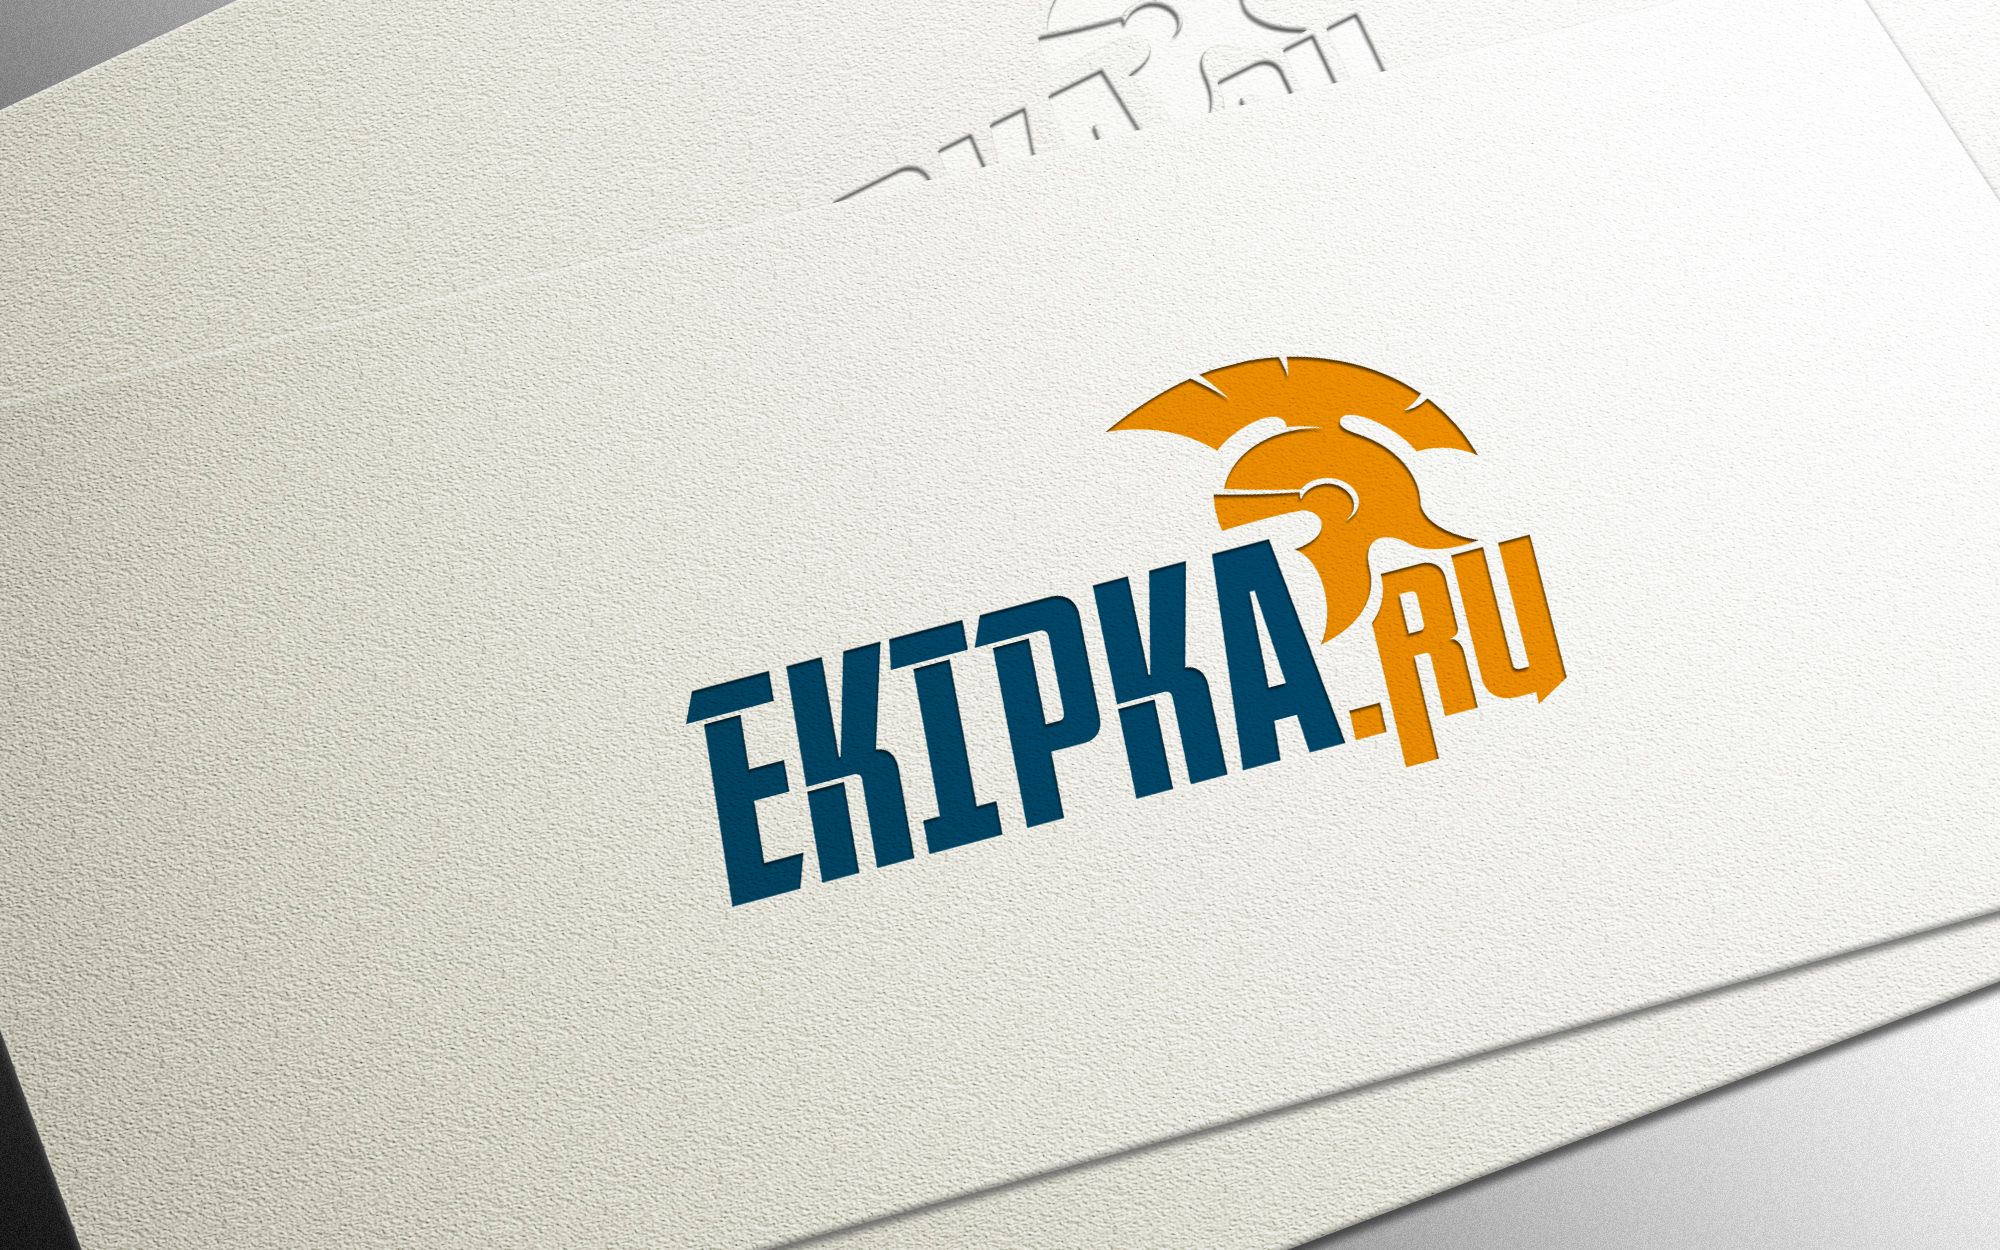 Лого для магазина мотоэкипировки ekipka.ru - дизайнер Gas-Min